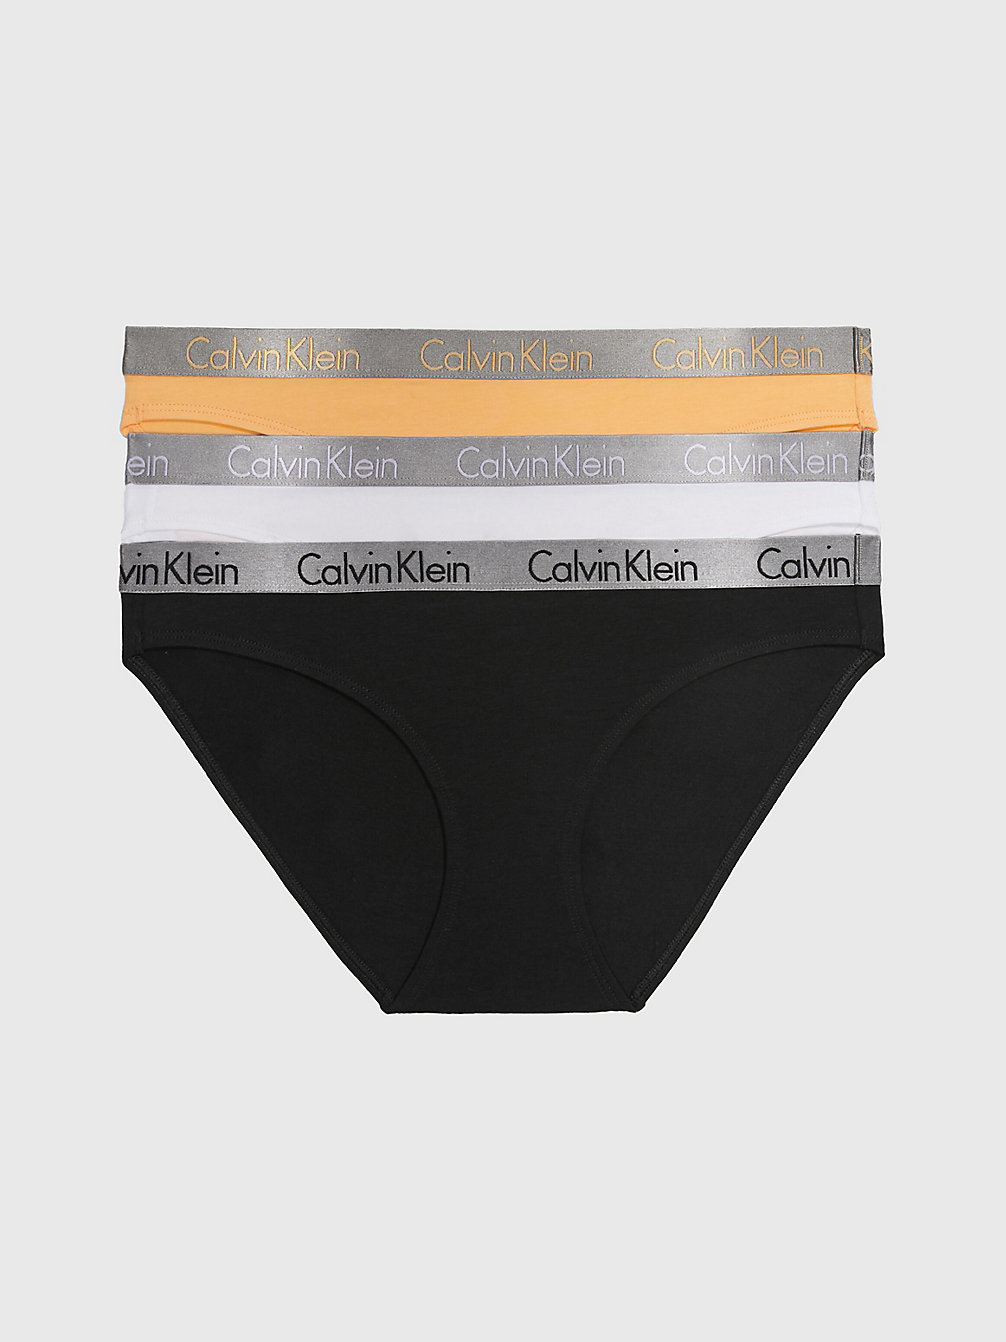 BLACK/WHITE/ORANGE > 3-Pack Bikini Slips - Radiant Cotton > undefined dames - Calvin Klein